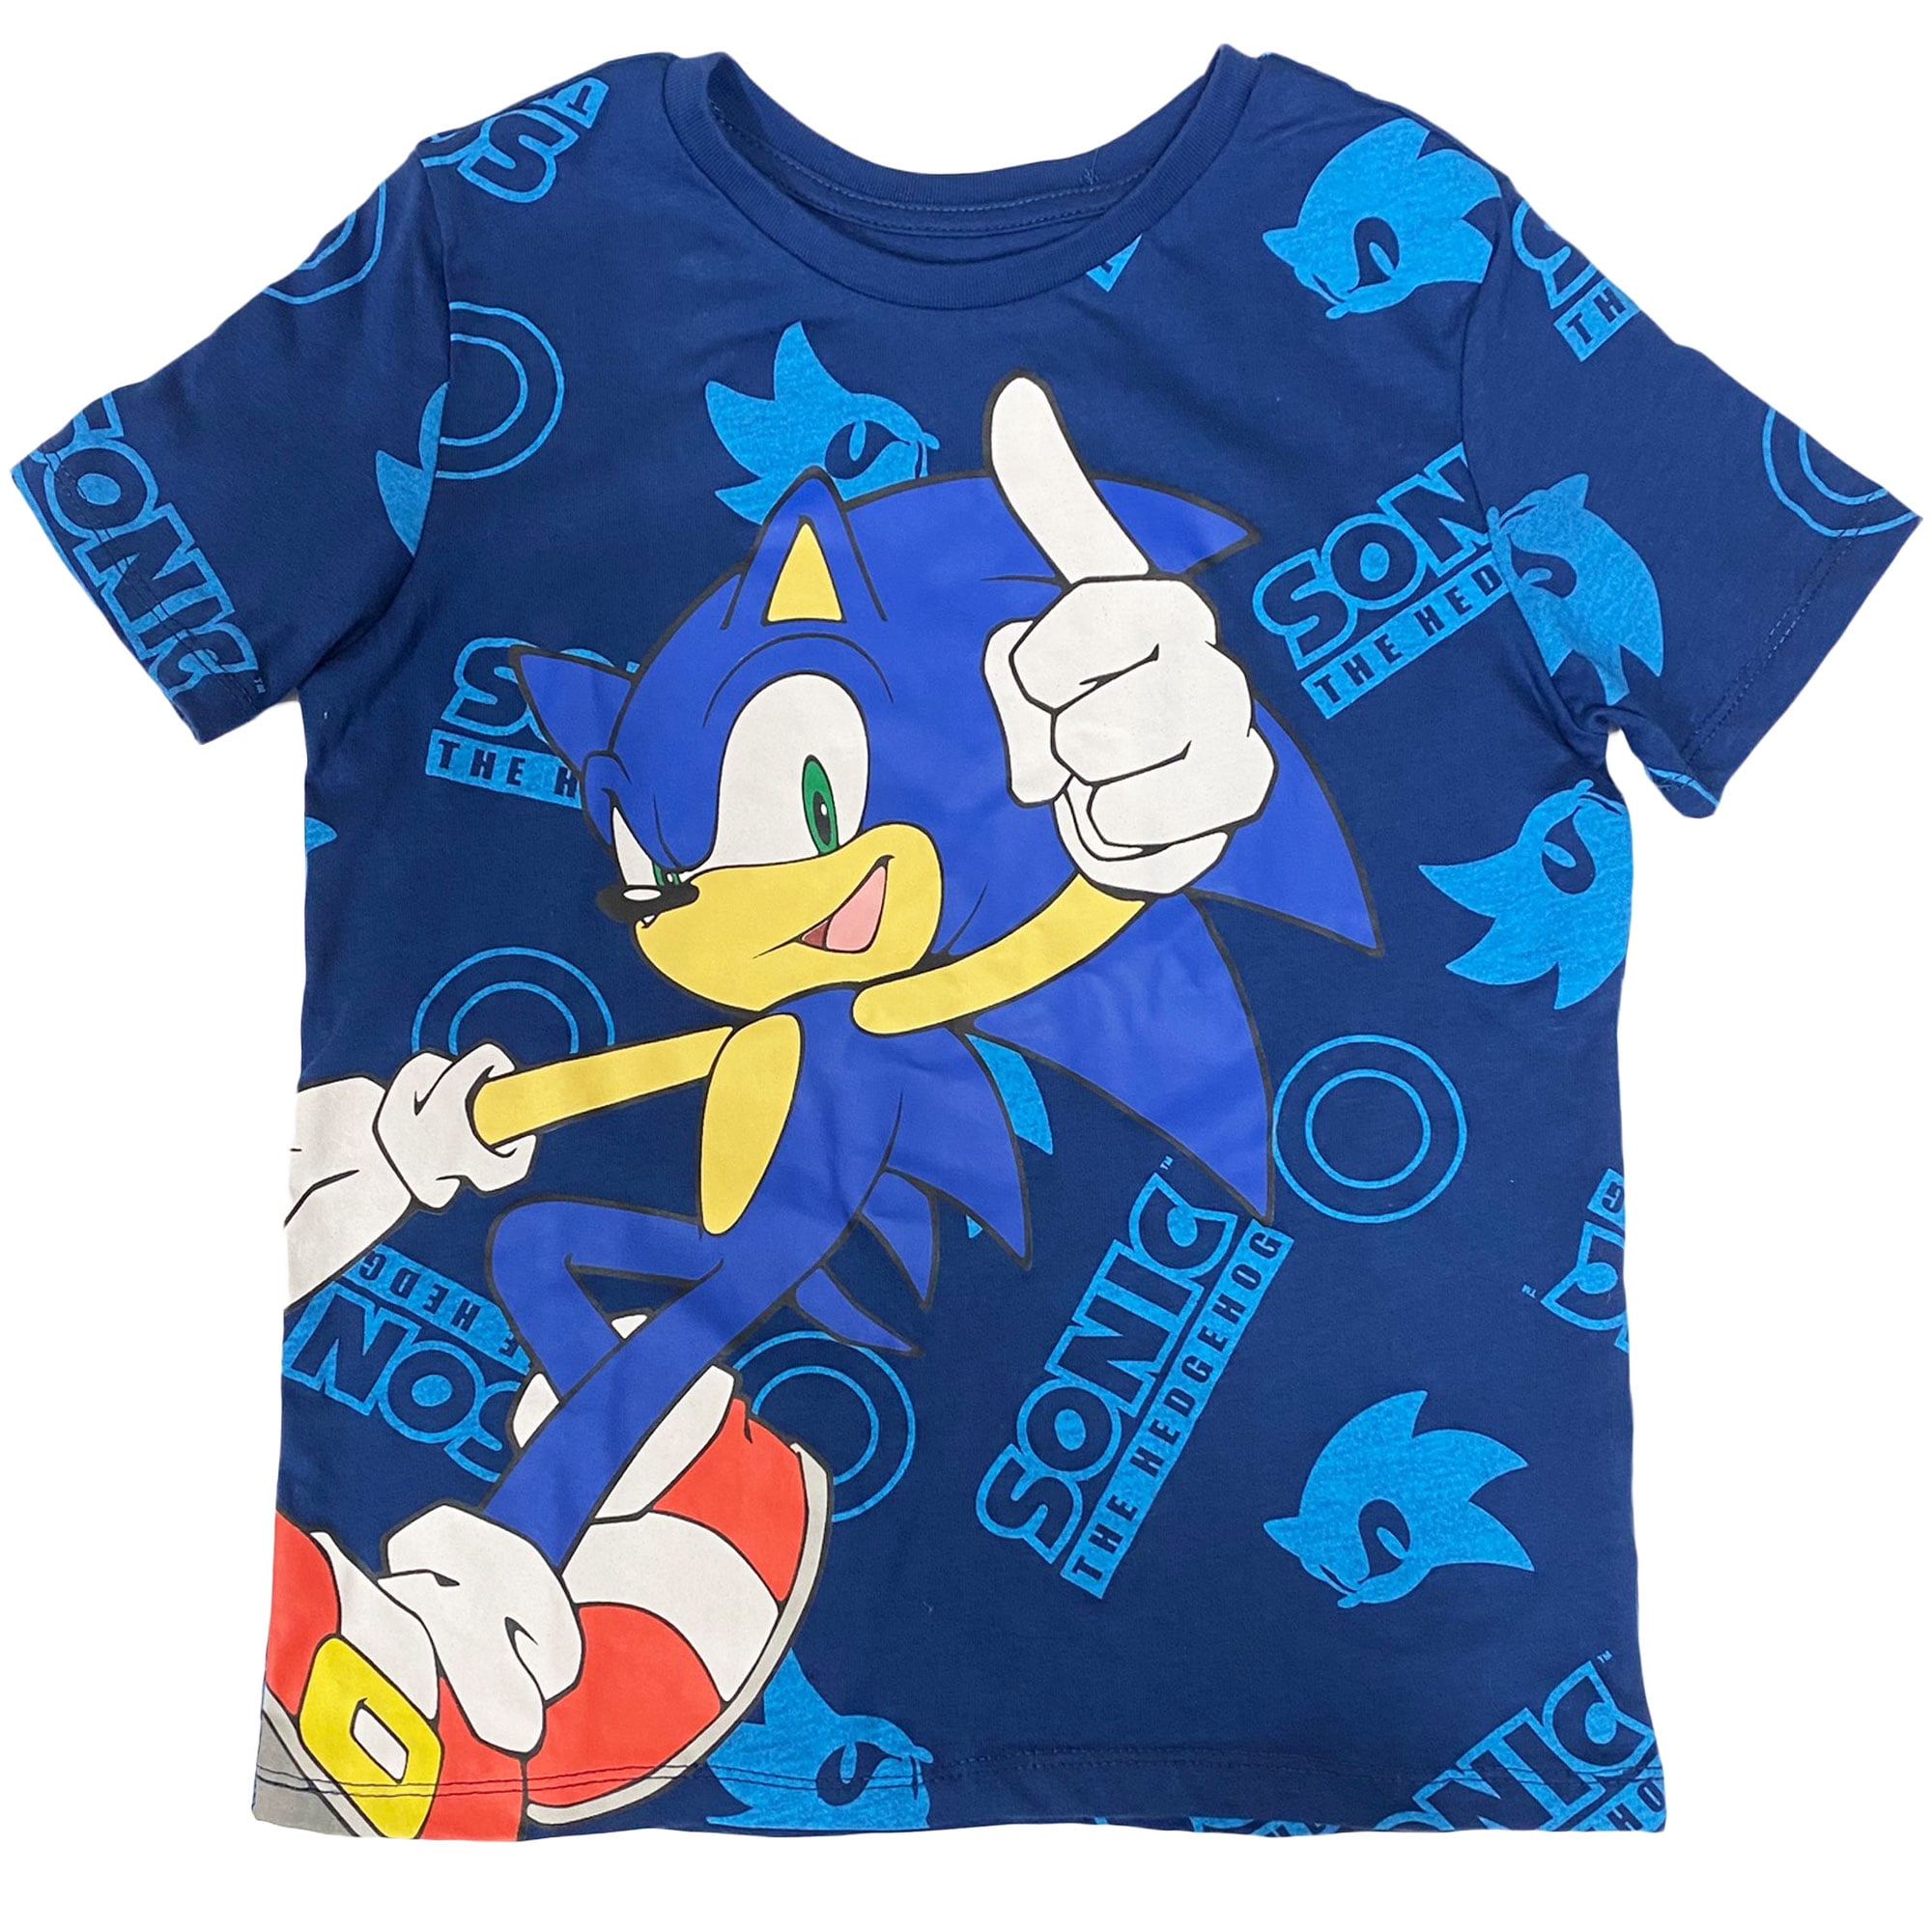 Sonic The Hedgehog Boys T Shirts Short Sleeve Kids T Shirt Gaming Merchandise